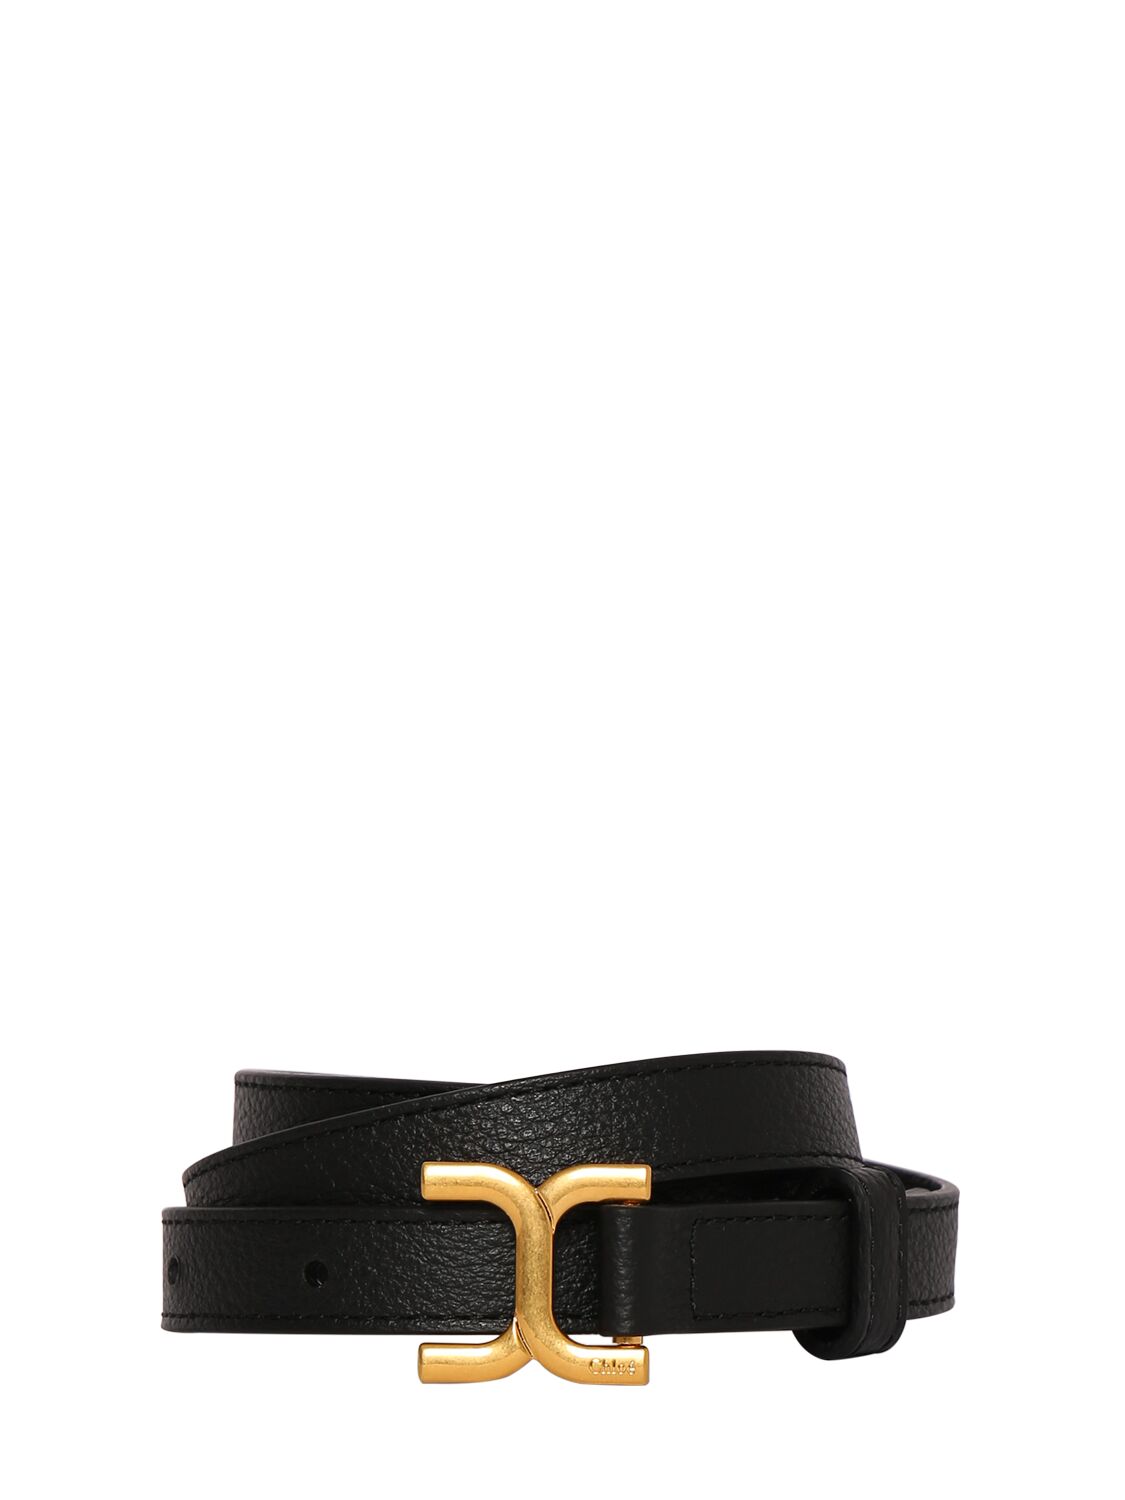 CHLOÉ Marcie Leather Belt